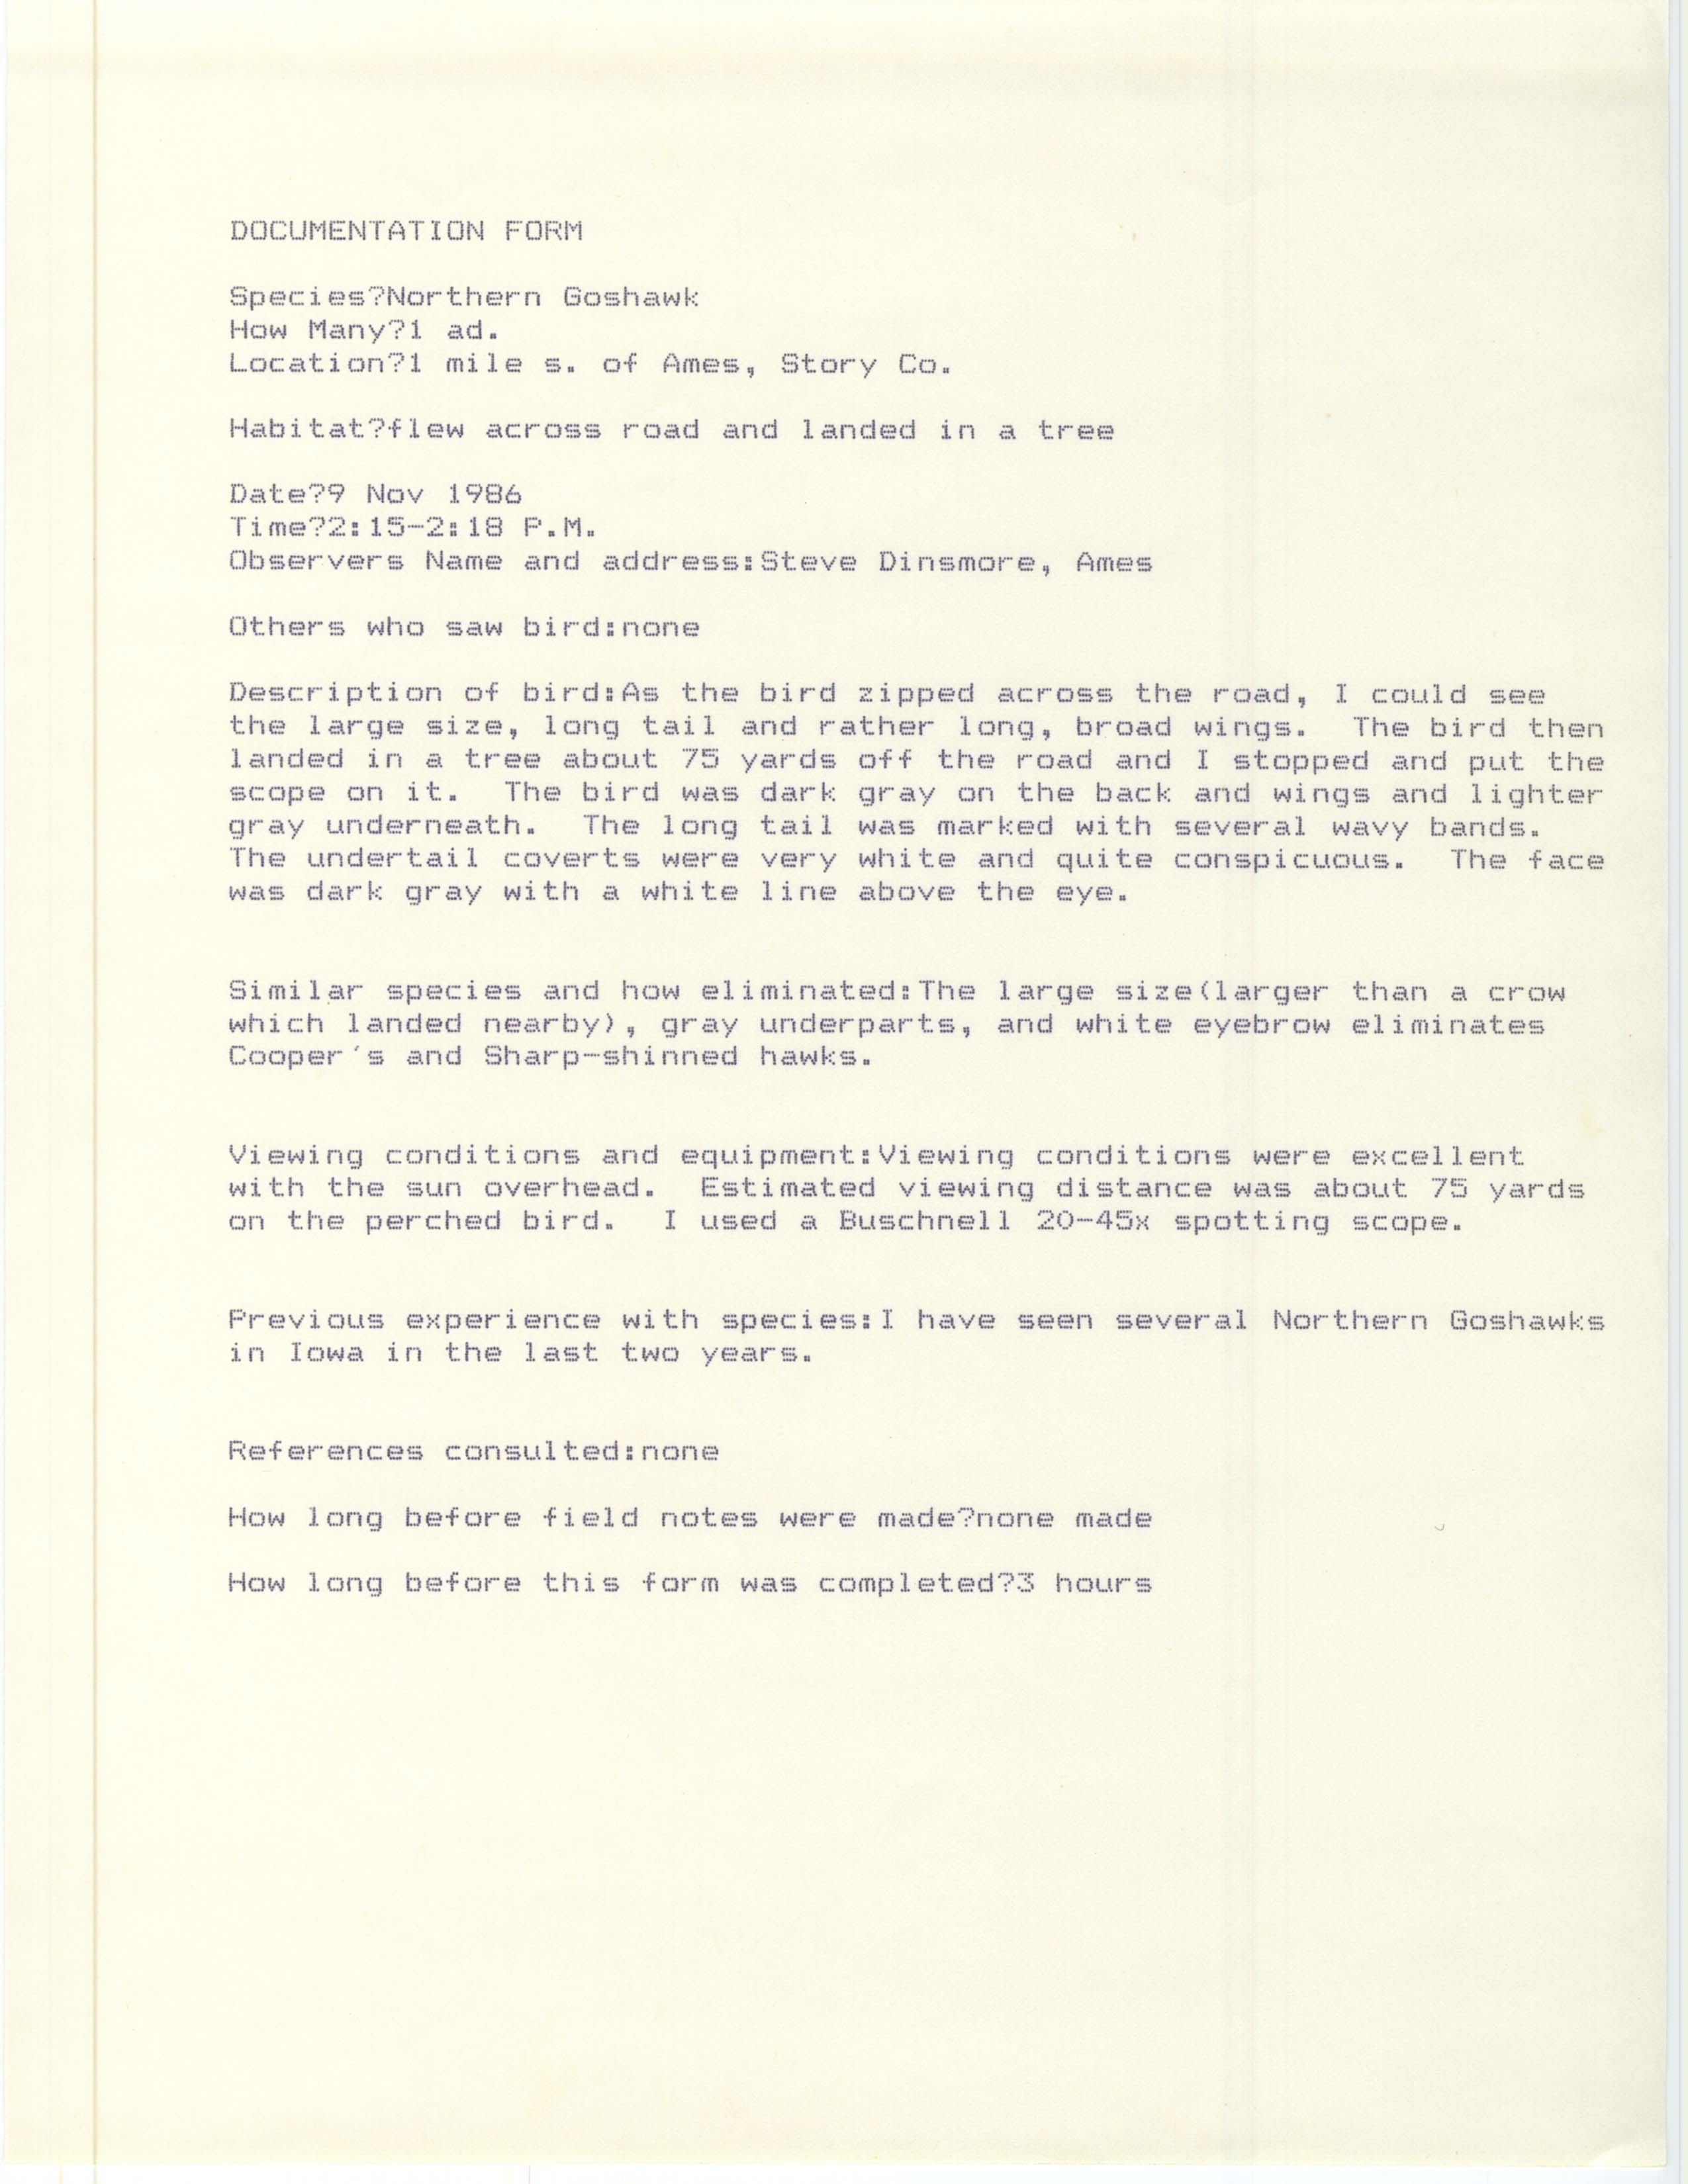 Rare bird documentation form for Northern Goshawk at Ames, 1986